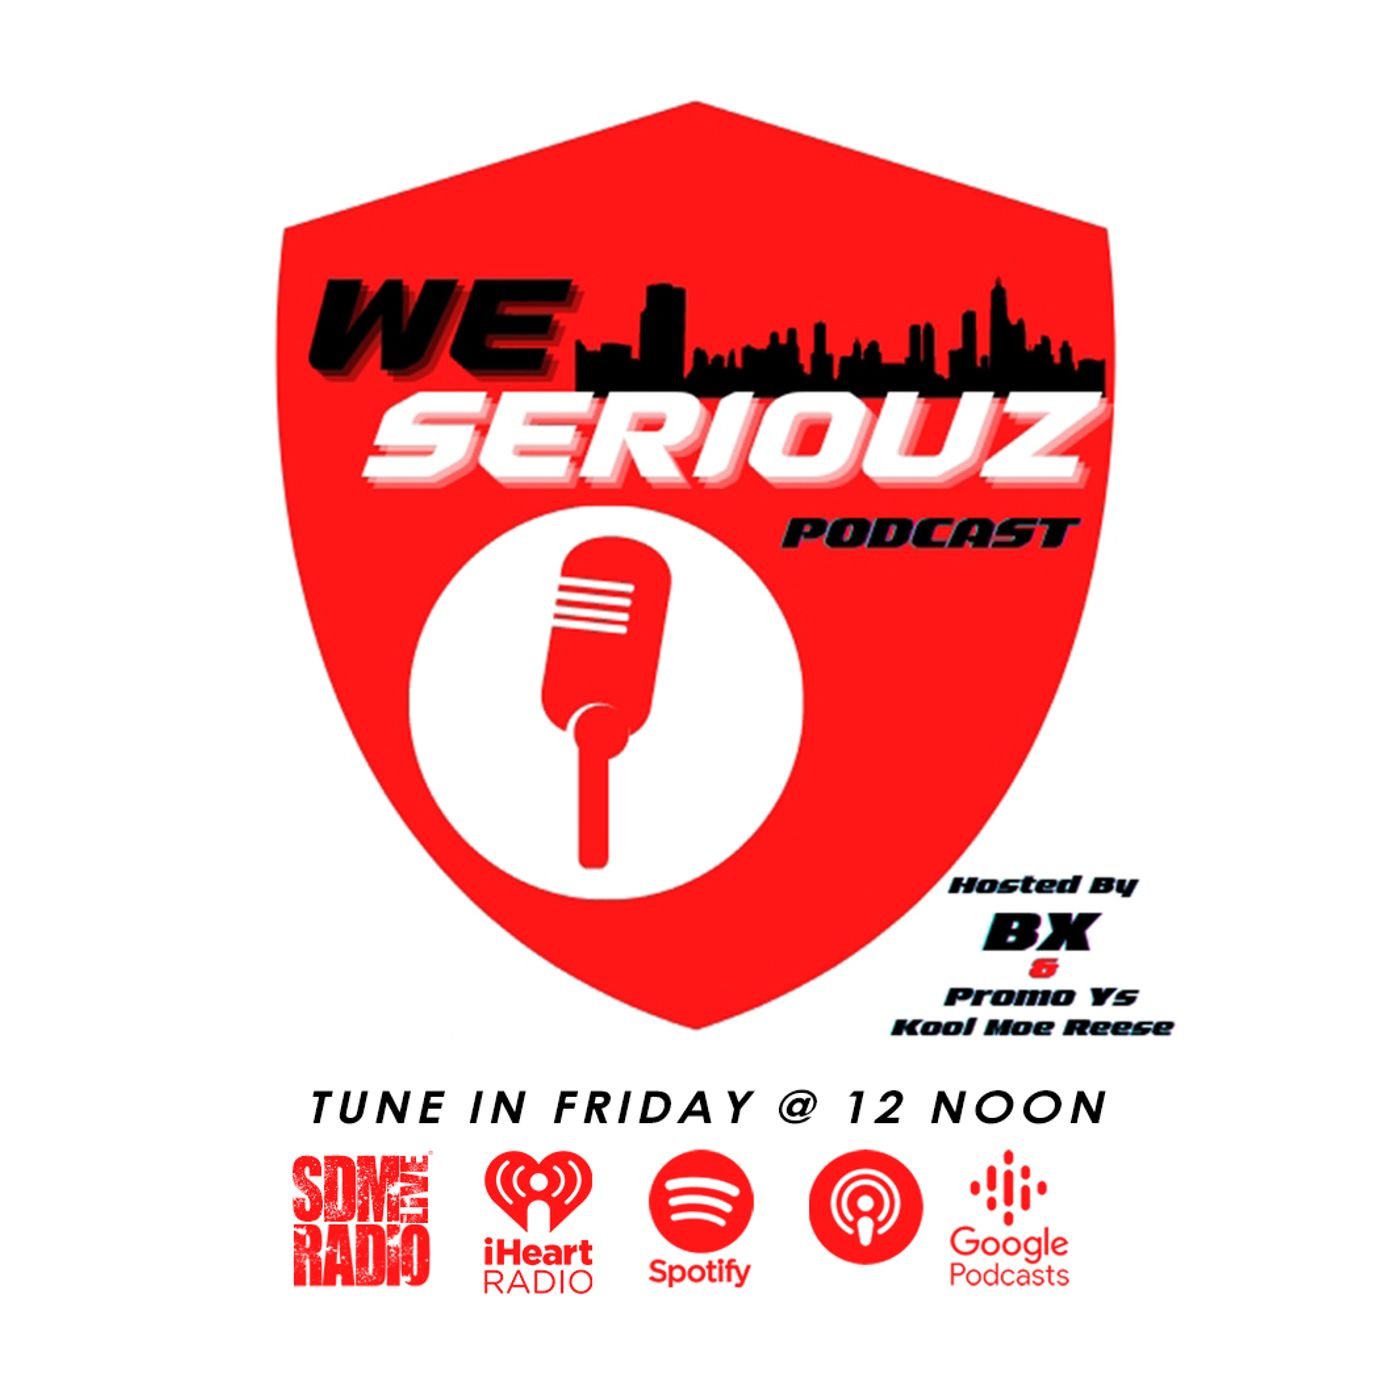 We Seriouz Podcast - Accountable & Responsibility